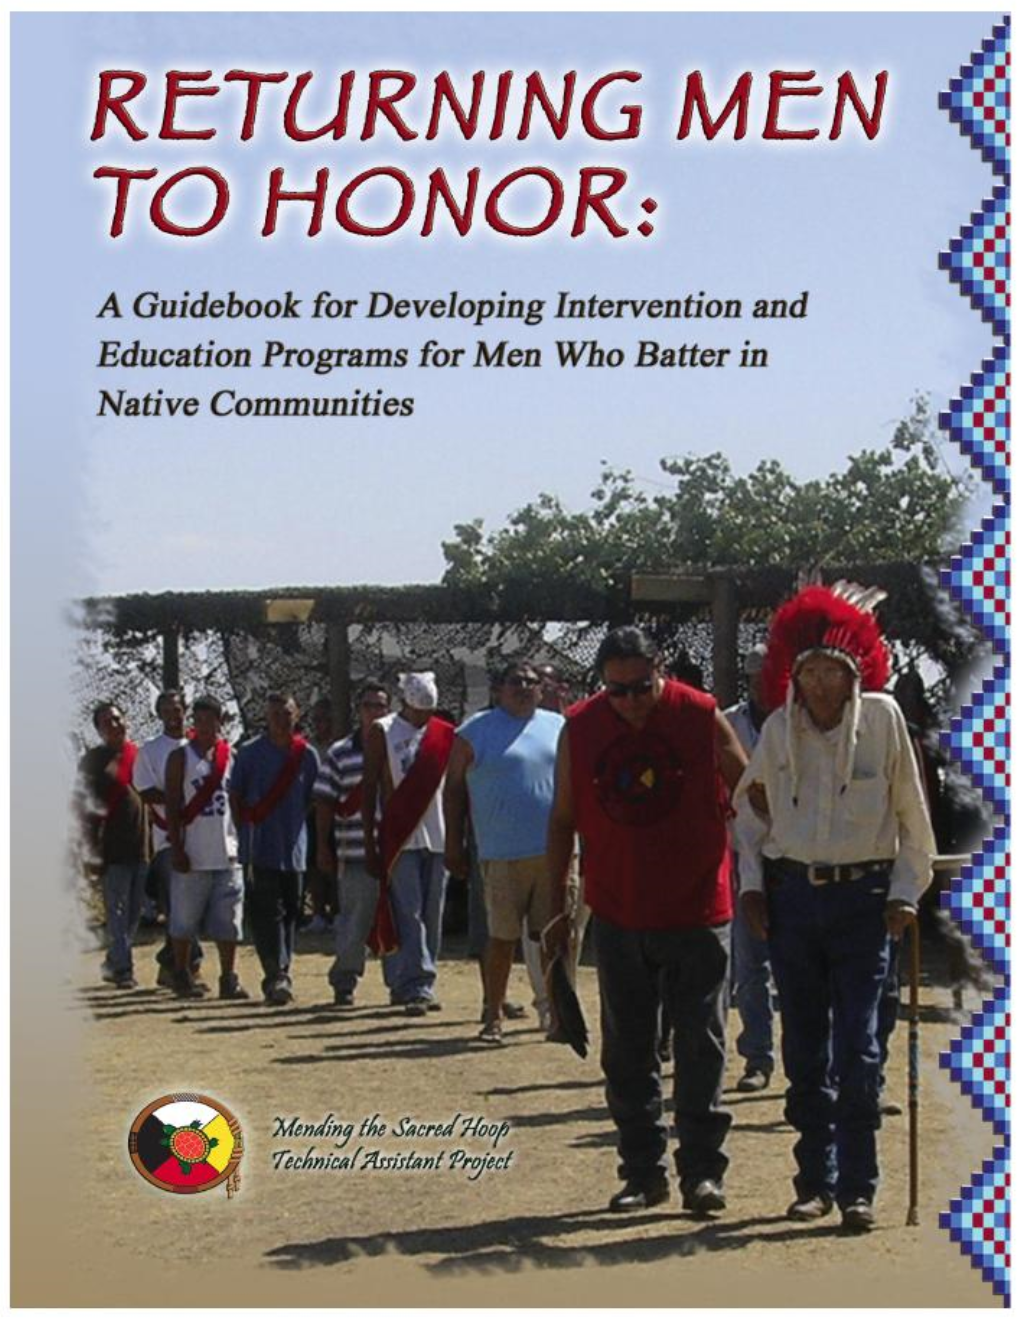 “Returning Men to Honor” Guidebook for Developing Men's Programs